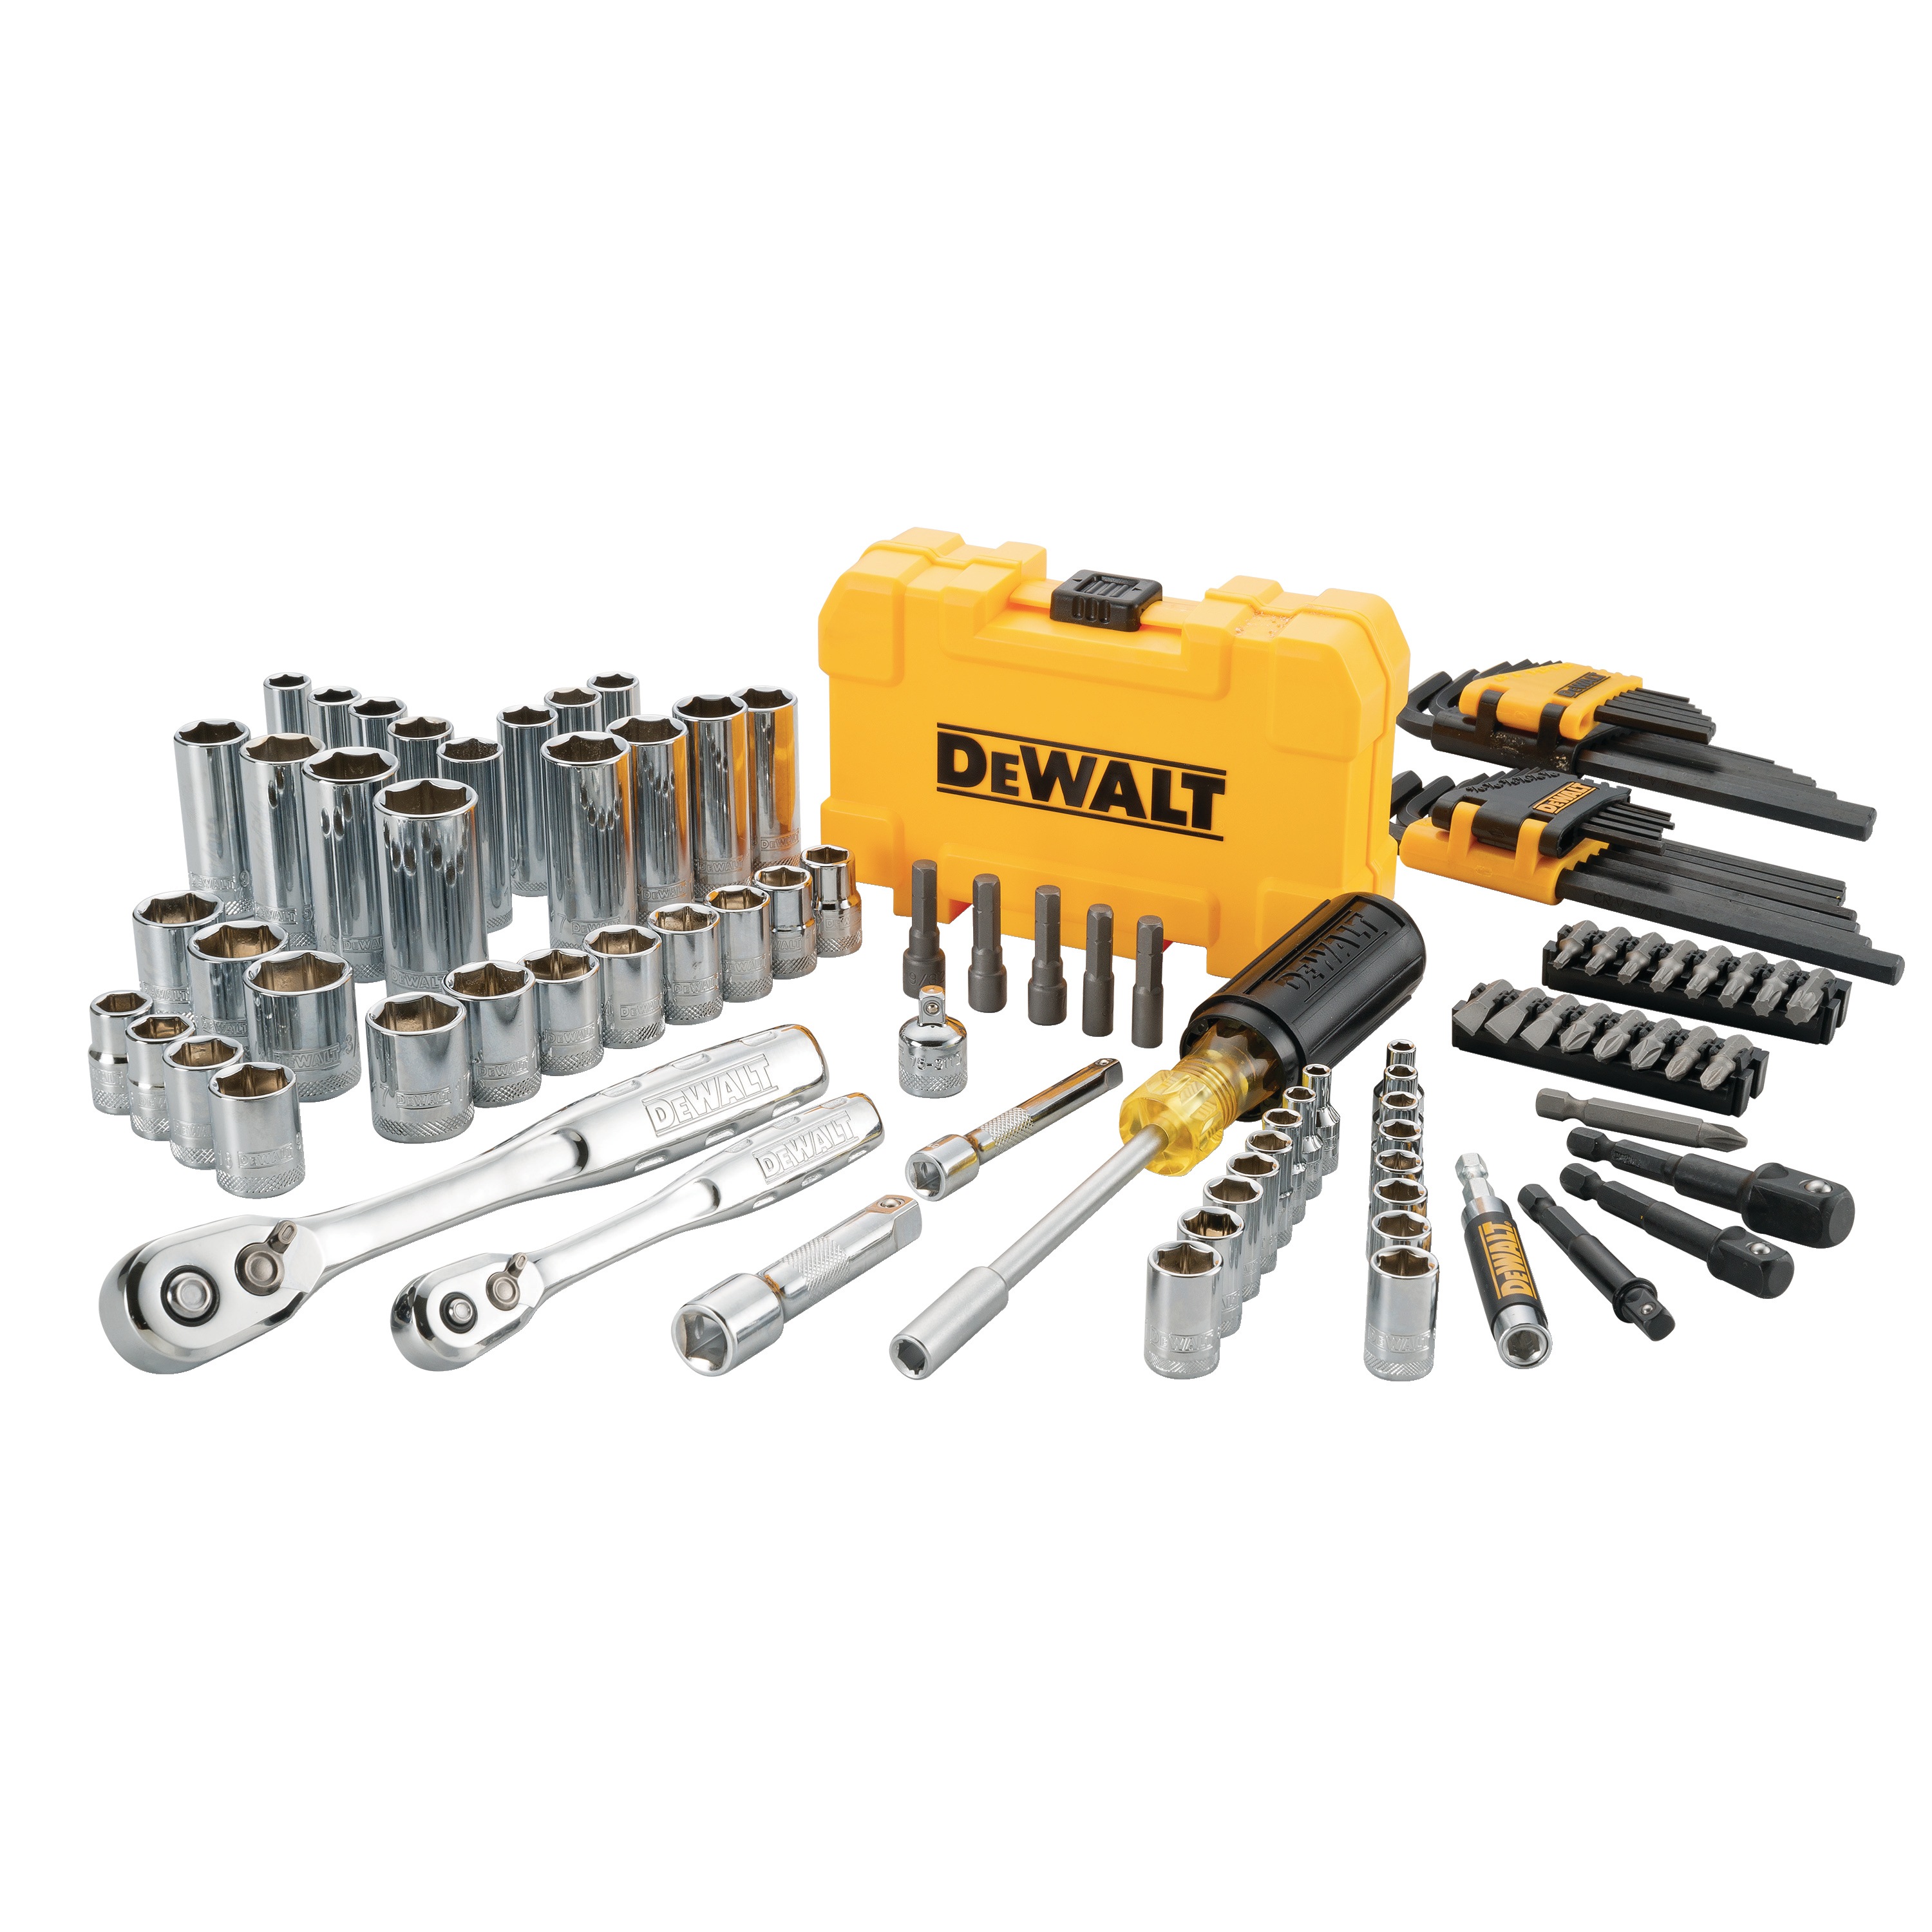 Dewalt Dwmt86011osp 1/4" Drive Universal Joint Adapters Mechanics Accessories for sale online